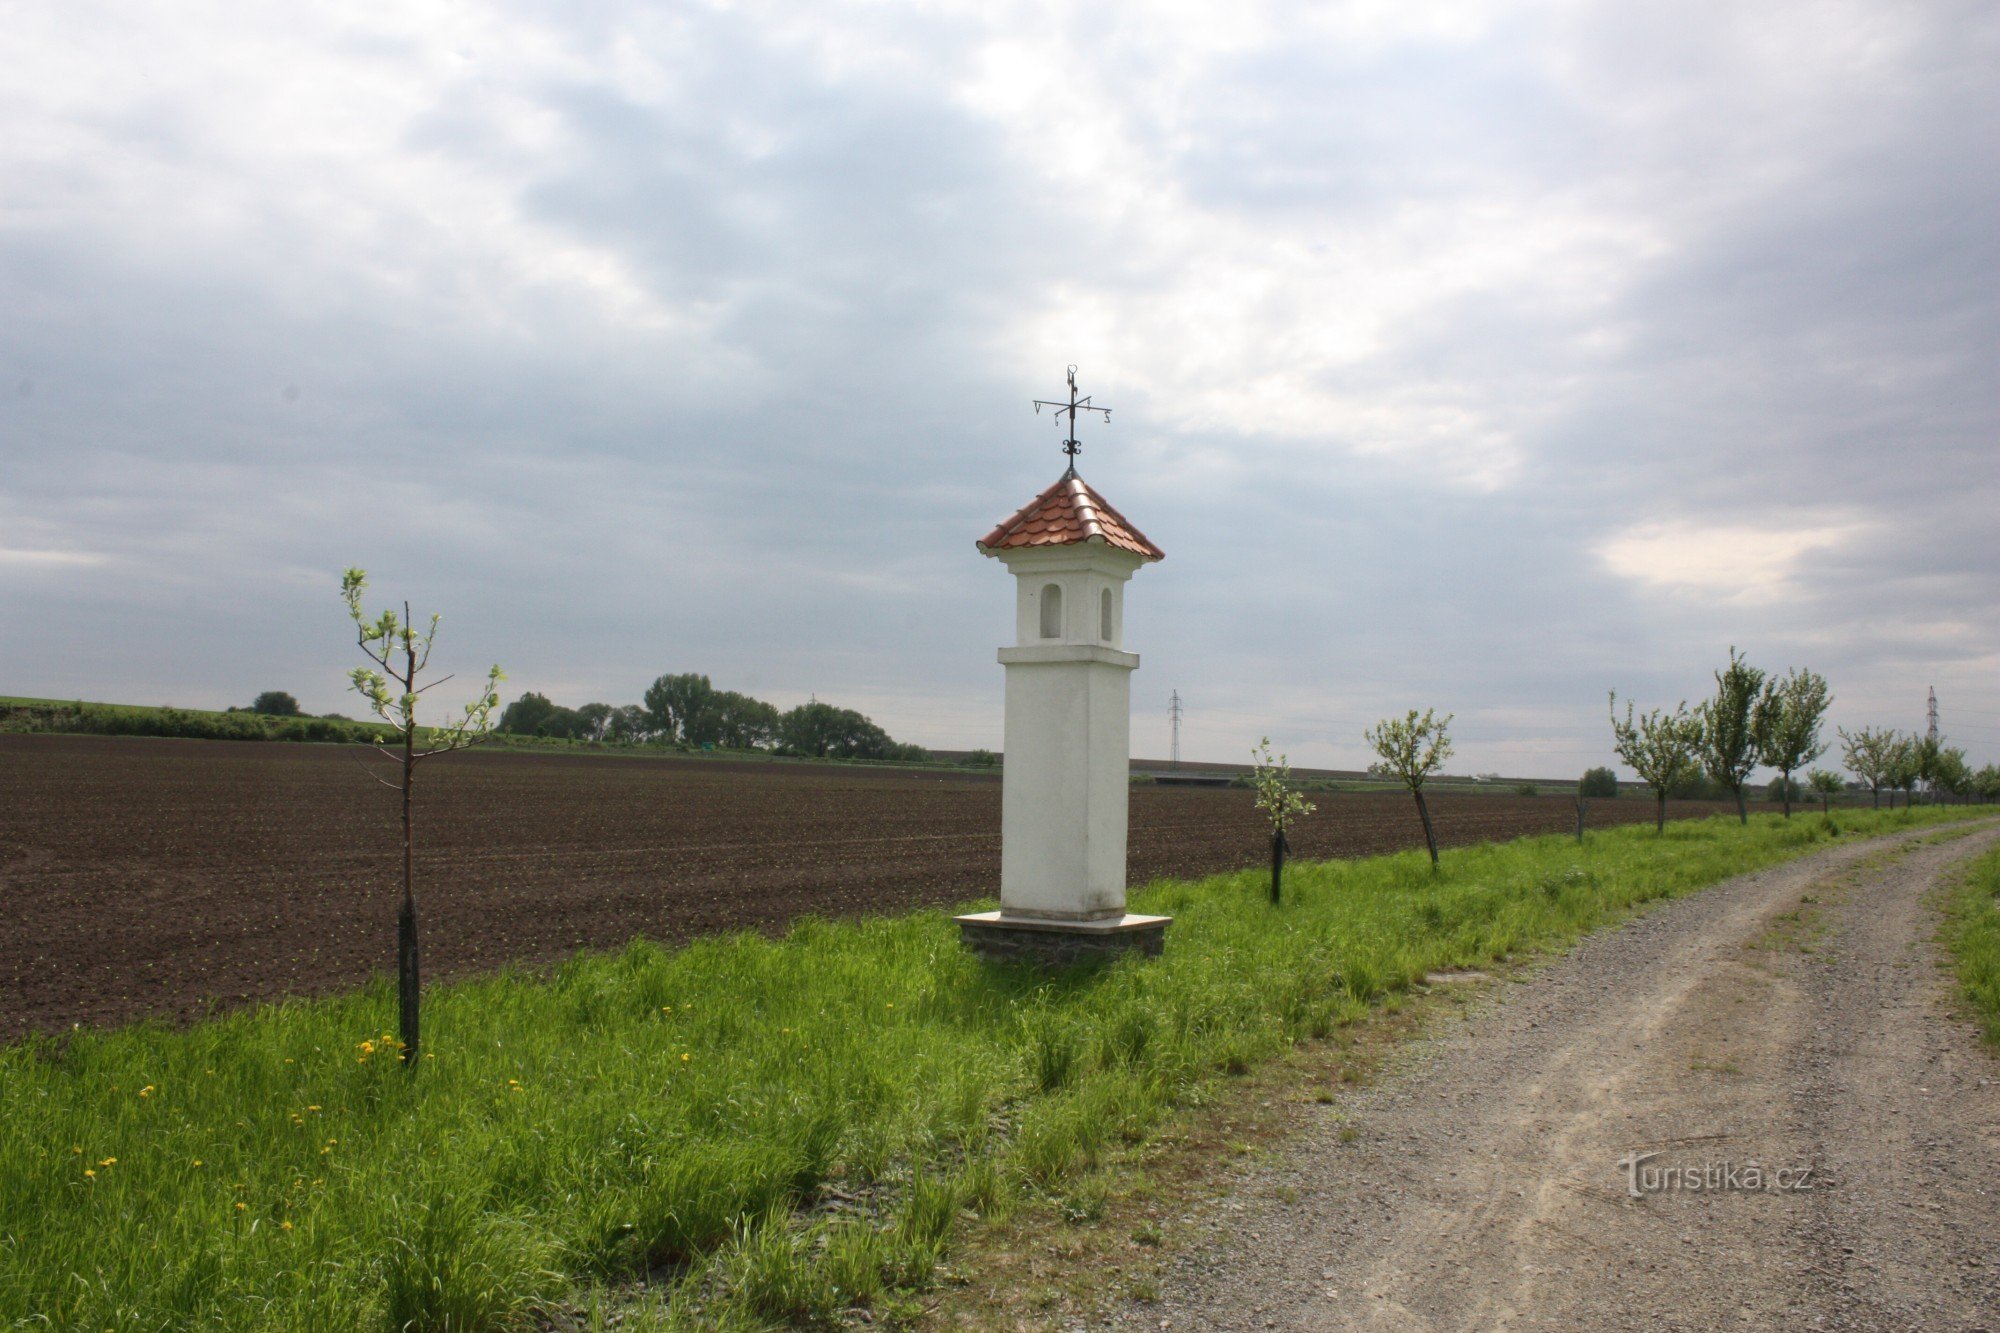 The Němčicko microregion and the small sacral monument Čičiňák